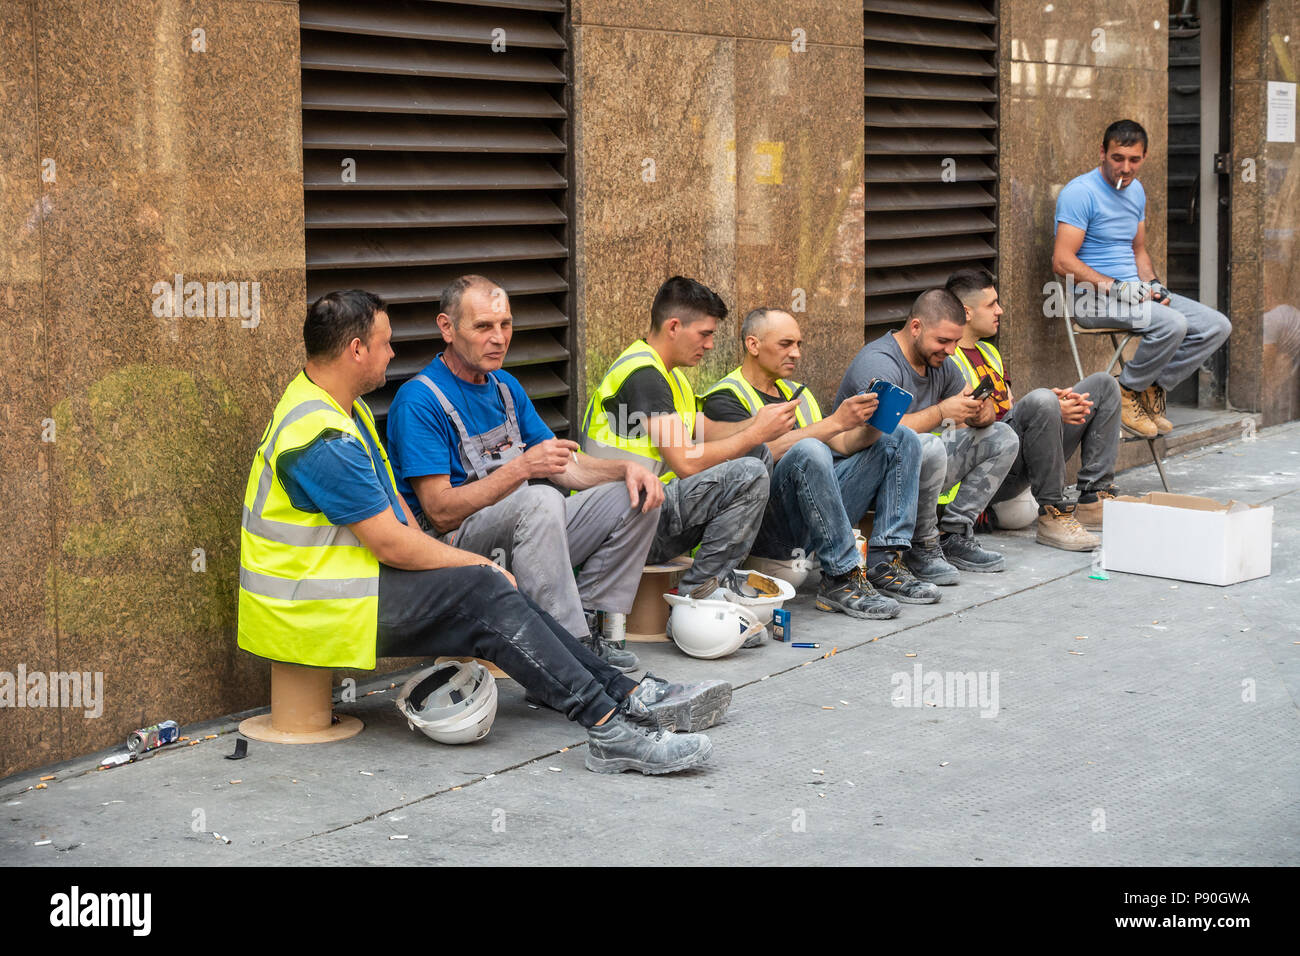 Seven workmen having a break, smlking, checking phones, chatting and relaxing, Middlesex Road, Spitalfields, east London, England, UK Stock Photo